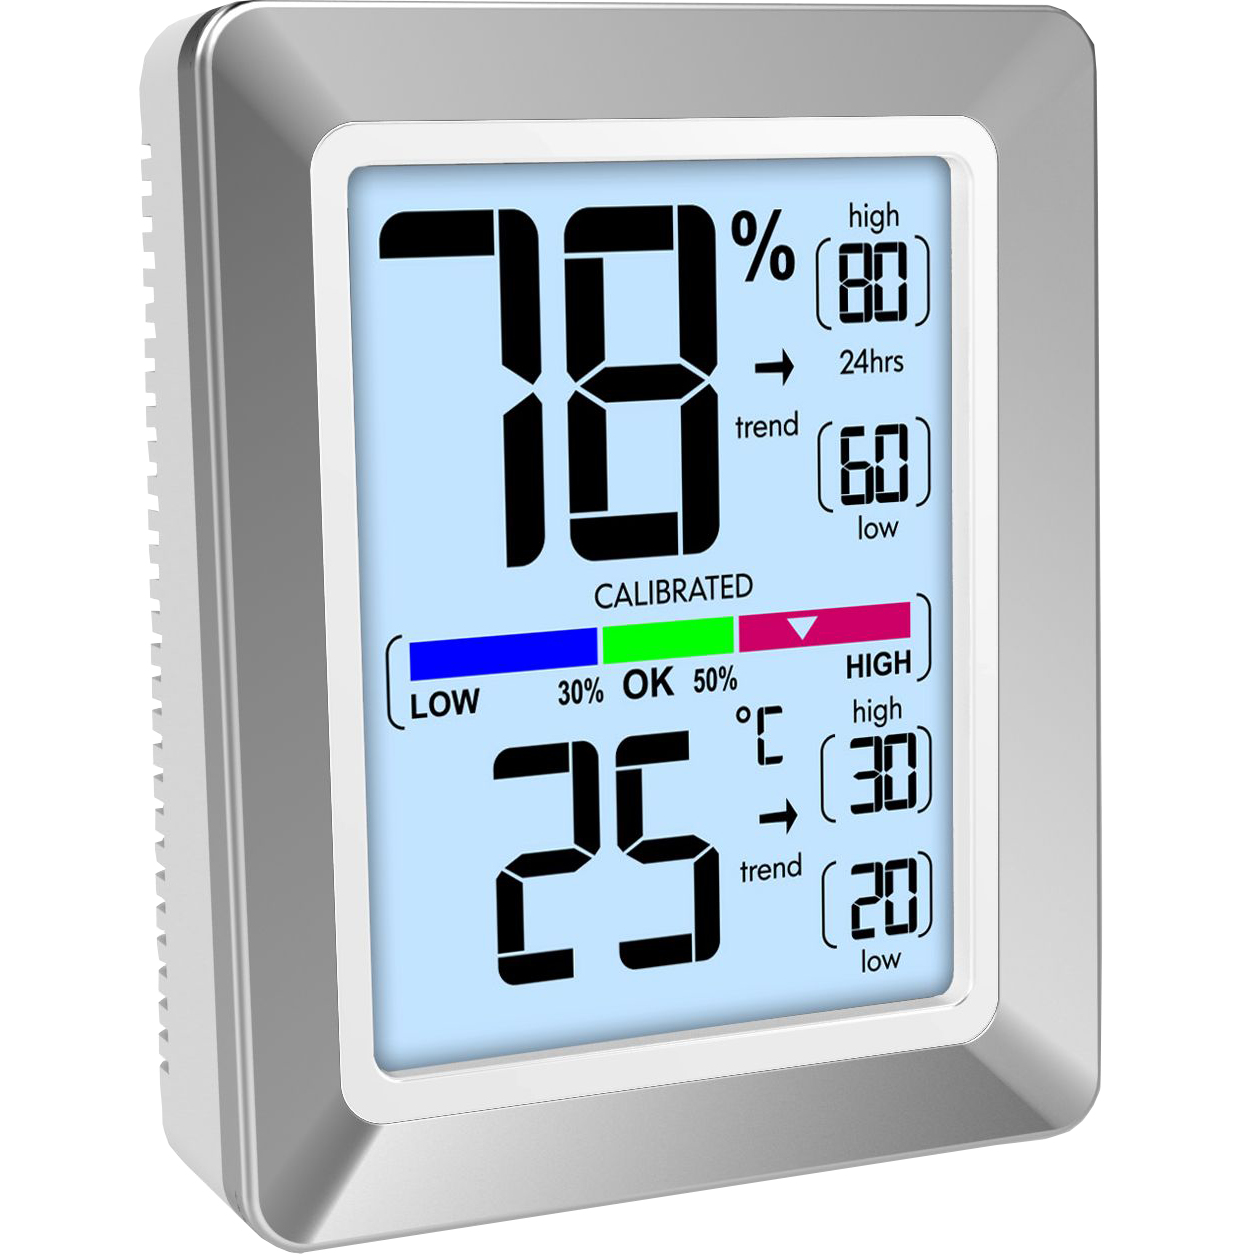 Technoline WS 9460 - Silber - Innen-Hygrometer - Innen-Thermometer -  Hygrometer - Thermometer - Hygrometer - Thermometer - Akku - 73 mm